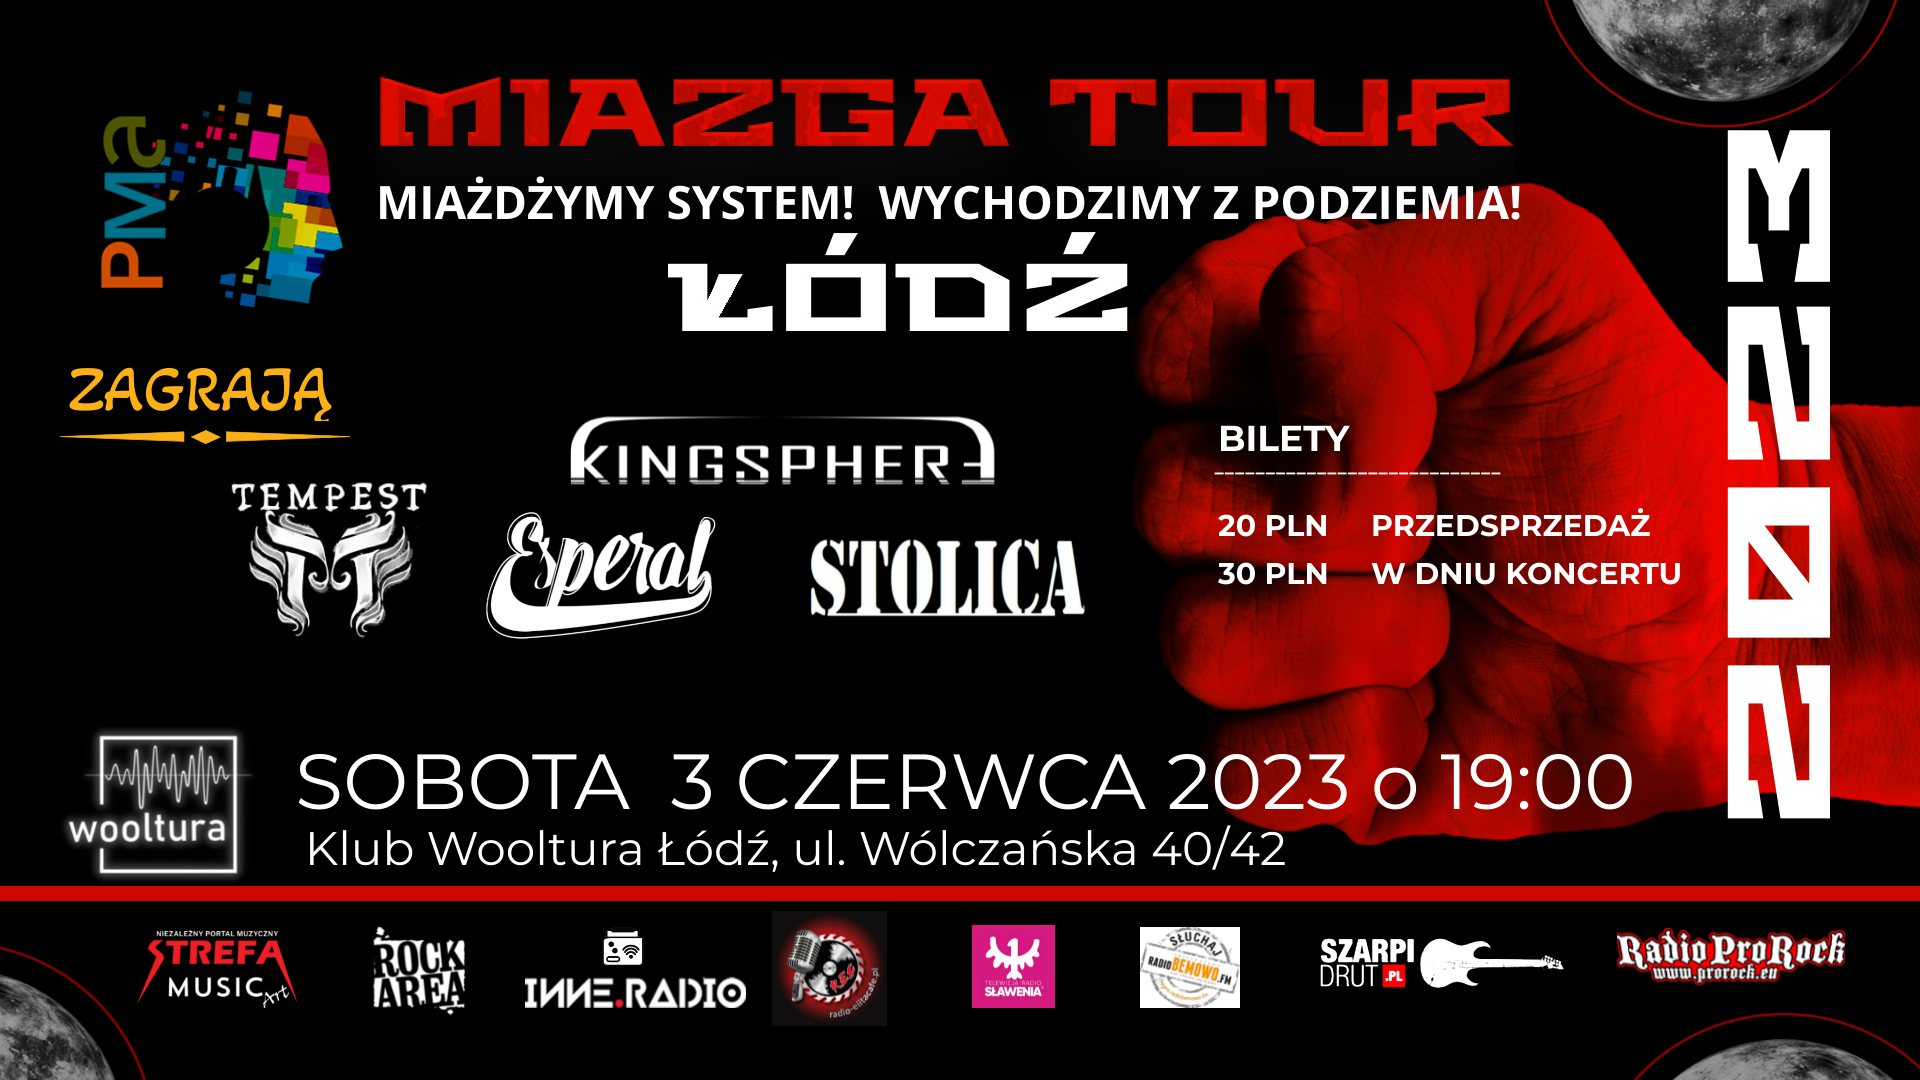 MIAZGA TOUR 2023 ŁÓDŹ | TEMPEST X ESPERAL X STOLICA X KINGSPHERE | Klub Wooltura